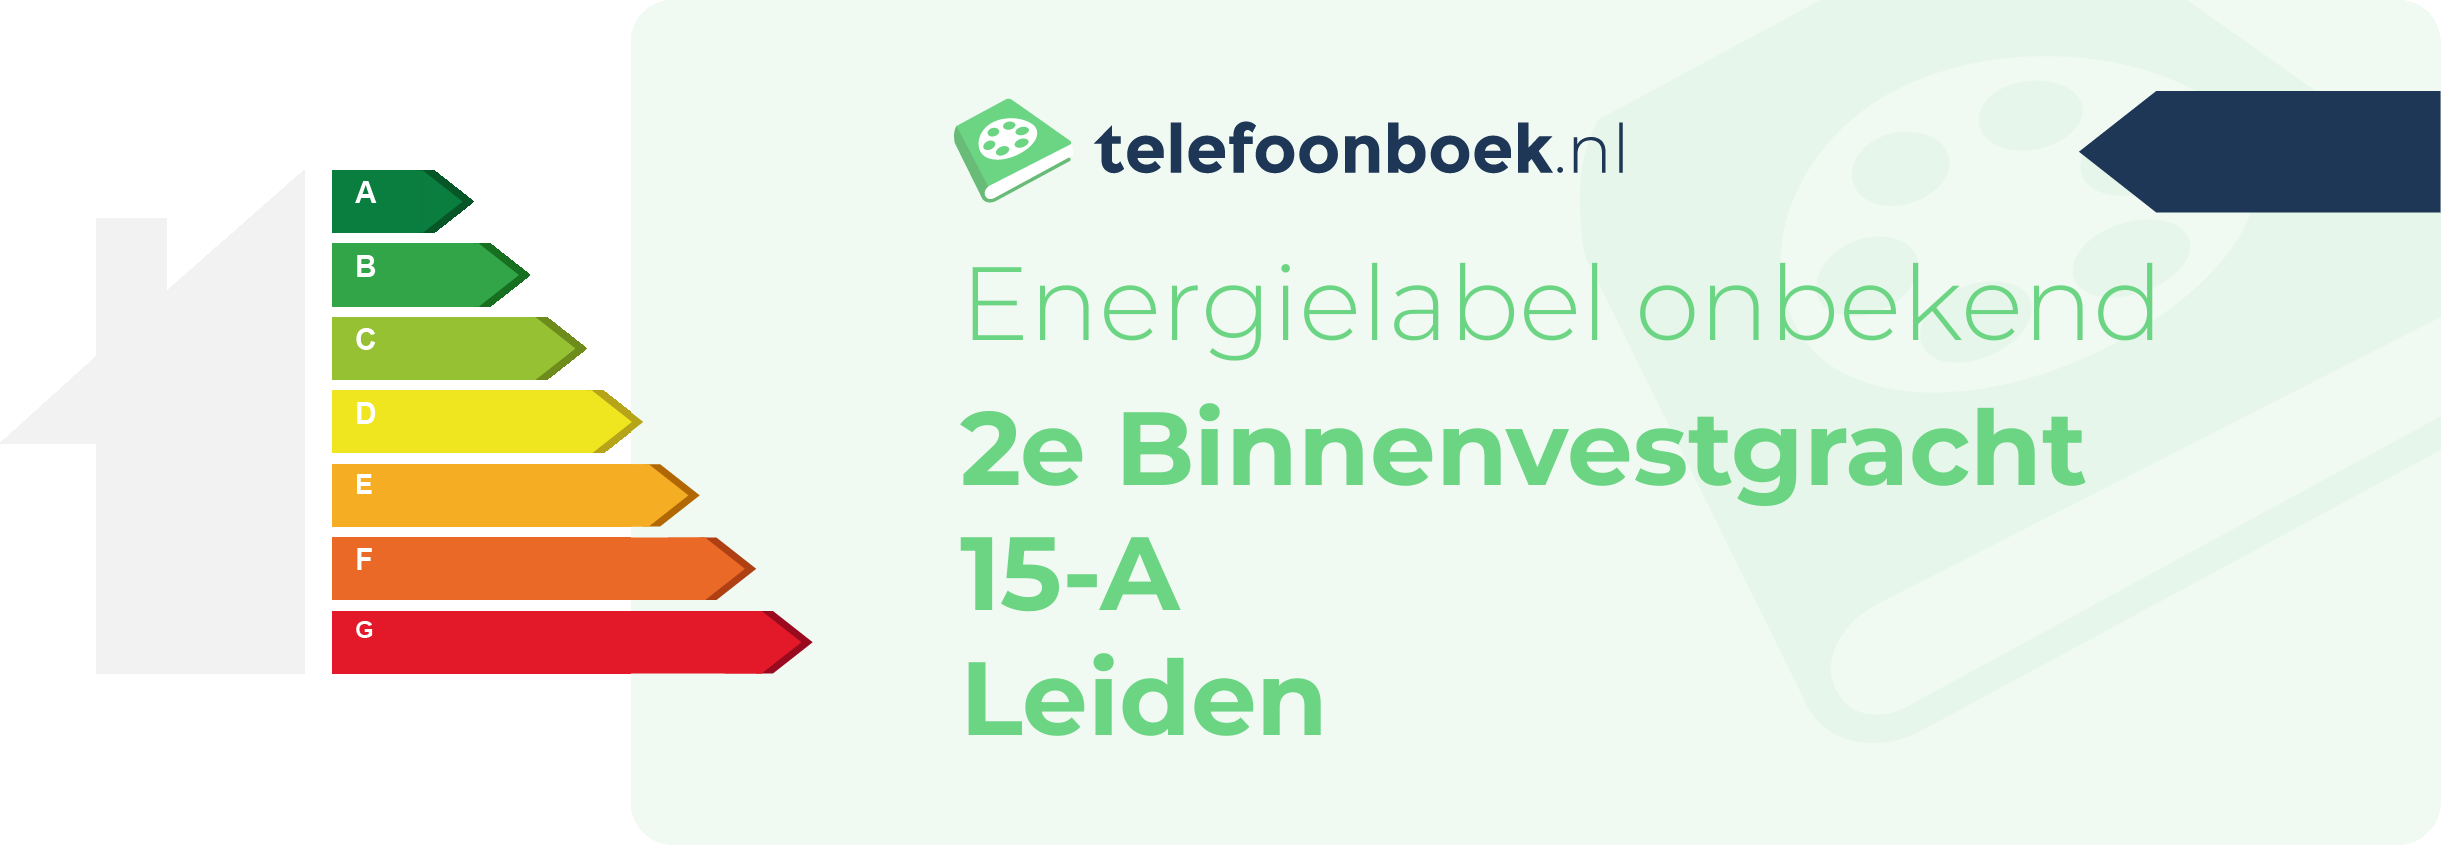 Energielabel 2e Binnenvestgracht 15-A Leiden